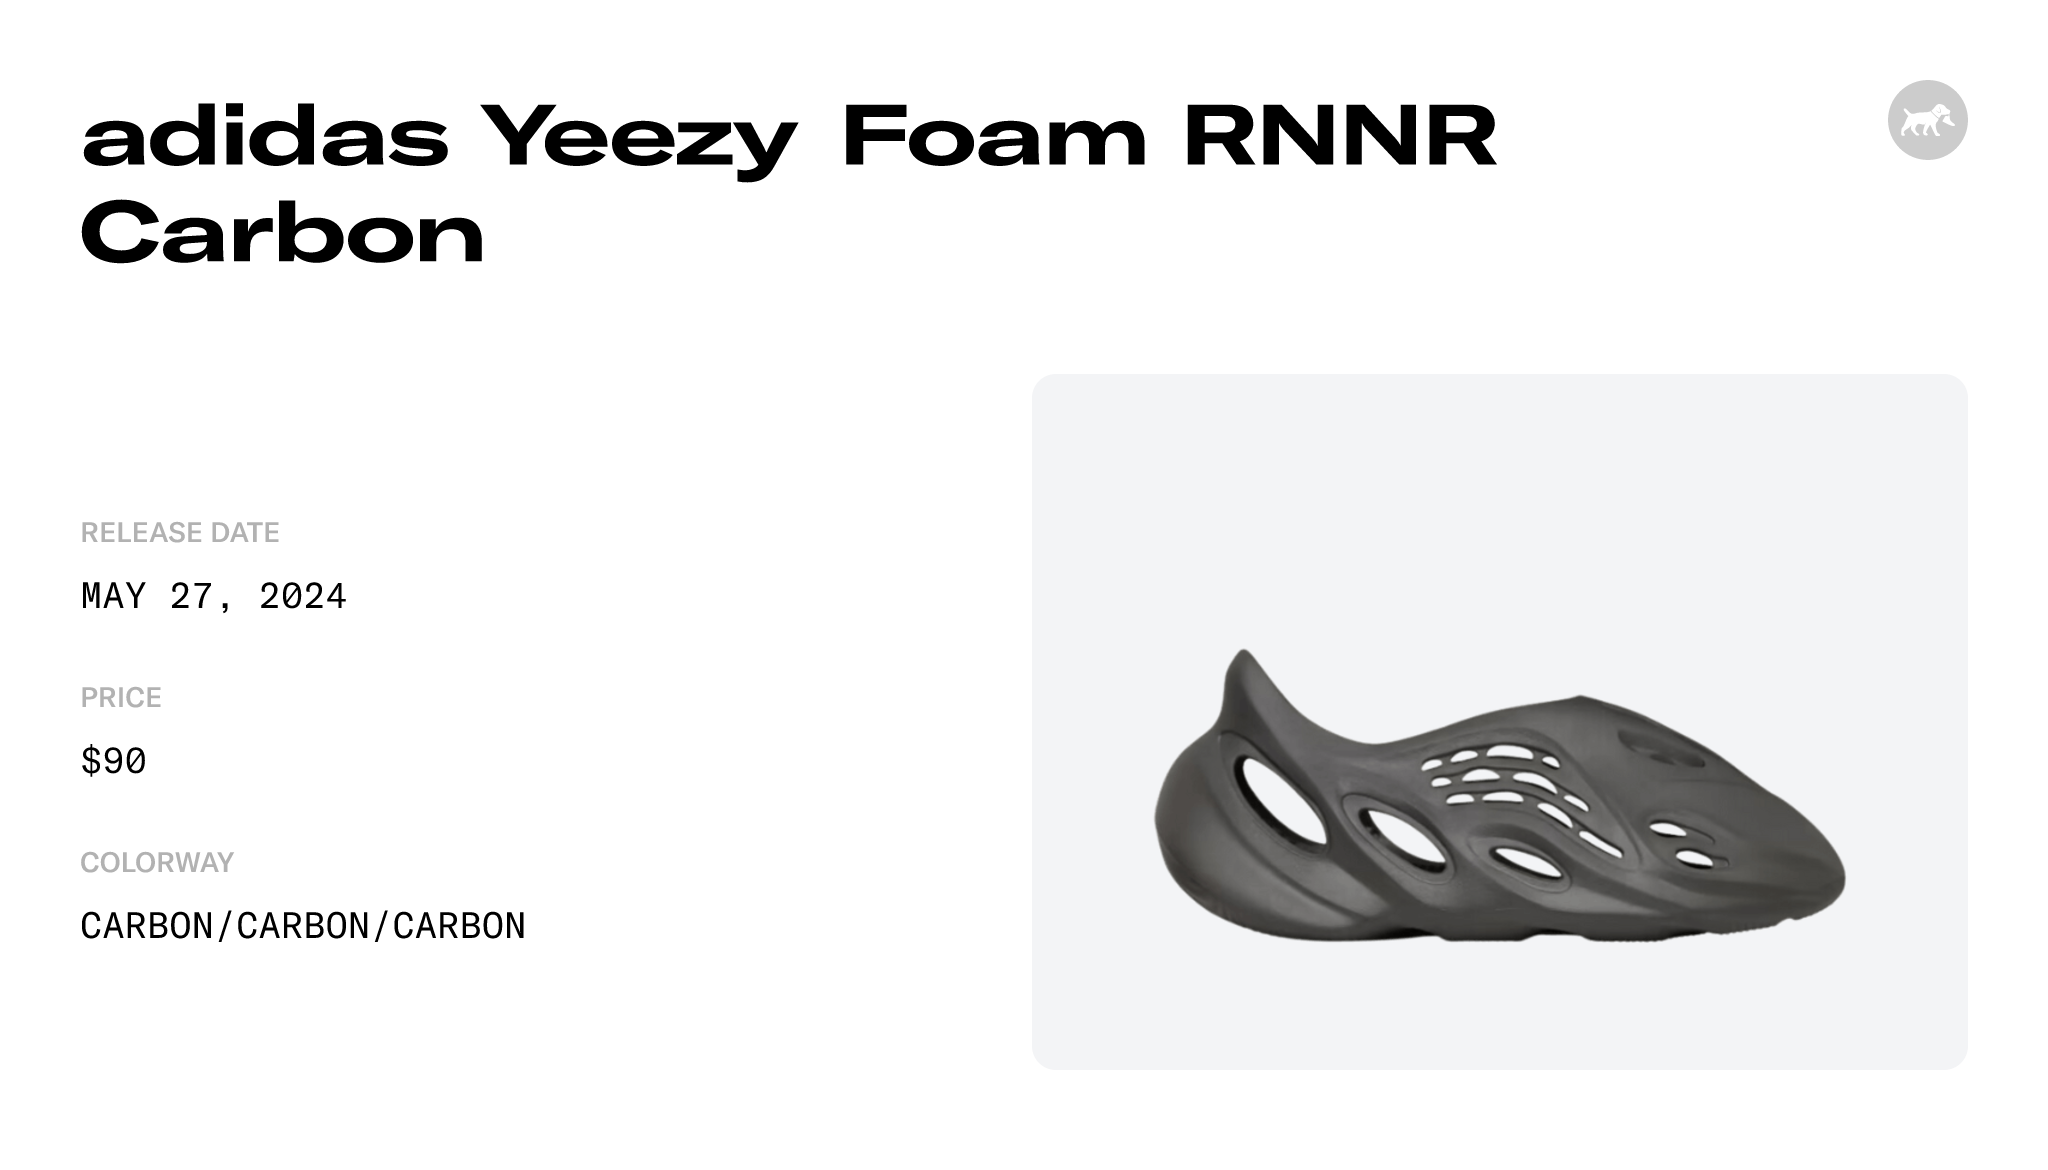 adidas Yeezy Foam RNNR Carbon - IG5349 Raffles and Release Date